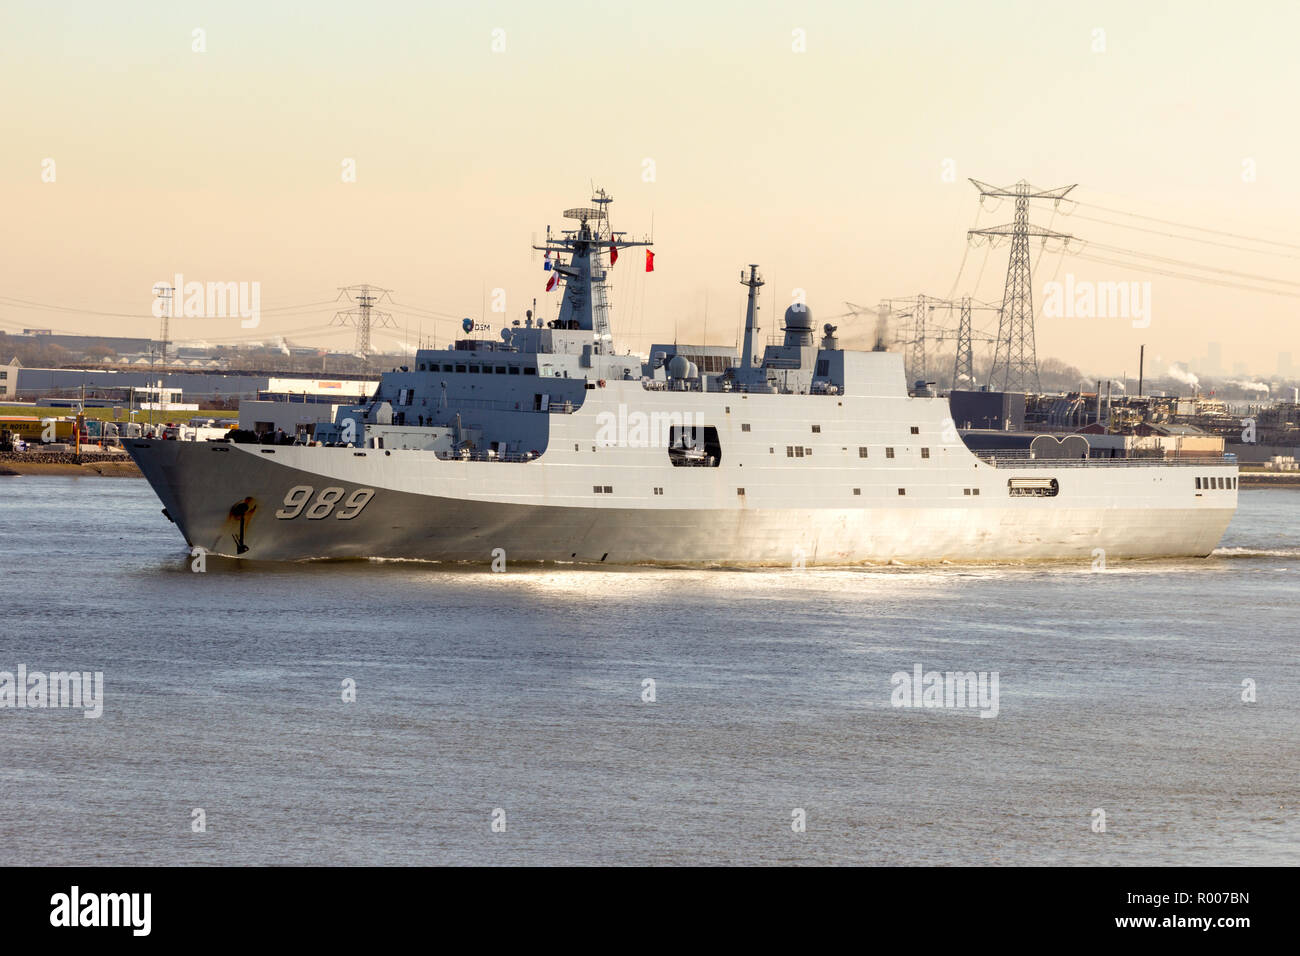 ROTTERDAM - JAN 30, 2015:  Chinese People's Liberation Army Navy (PLAN) amphibious transport ship 989 Changbai Shan (NATO name: Yuzhao) leaving the Po Stock Photo